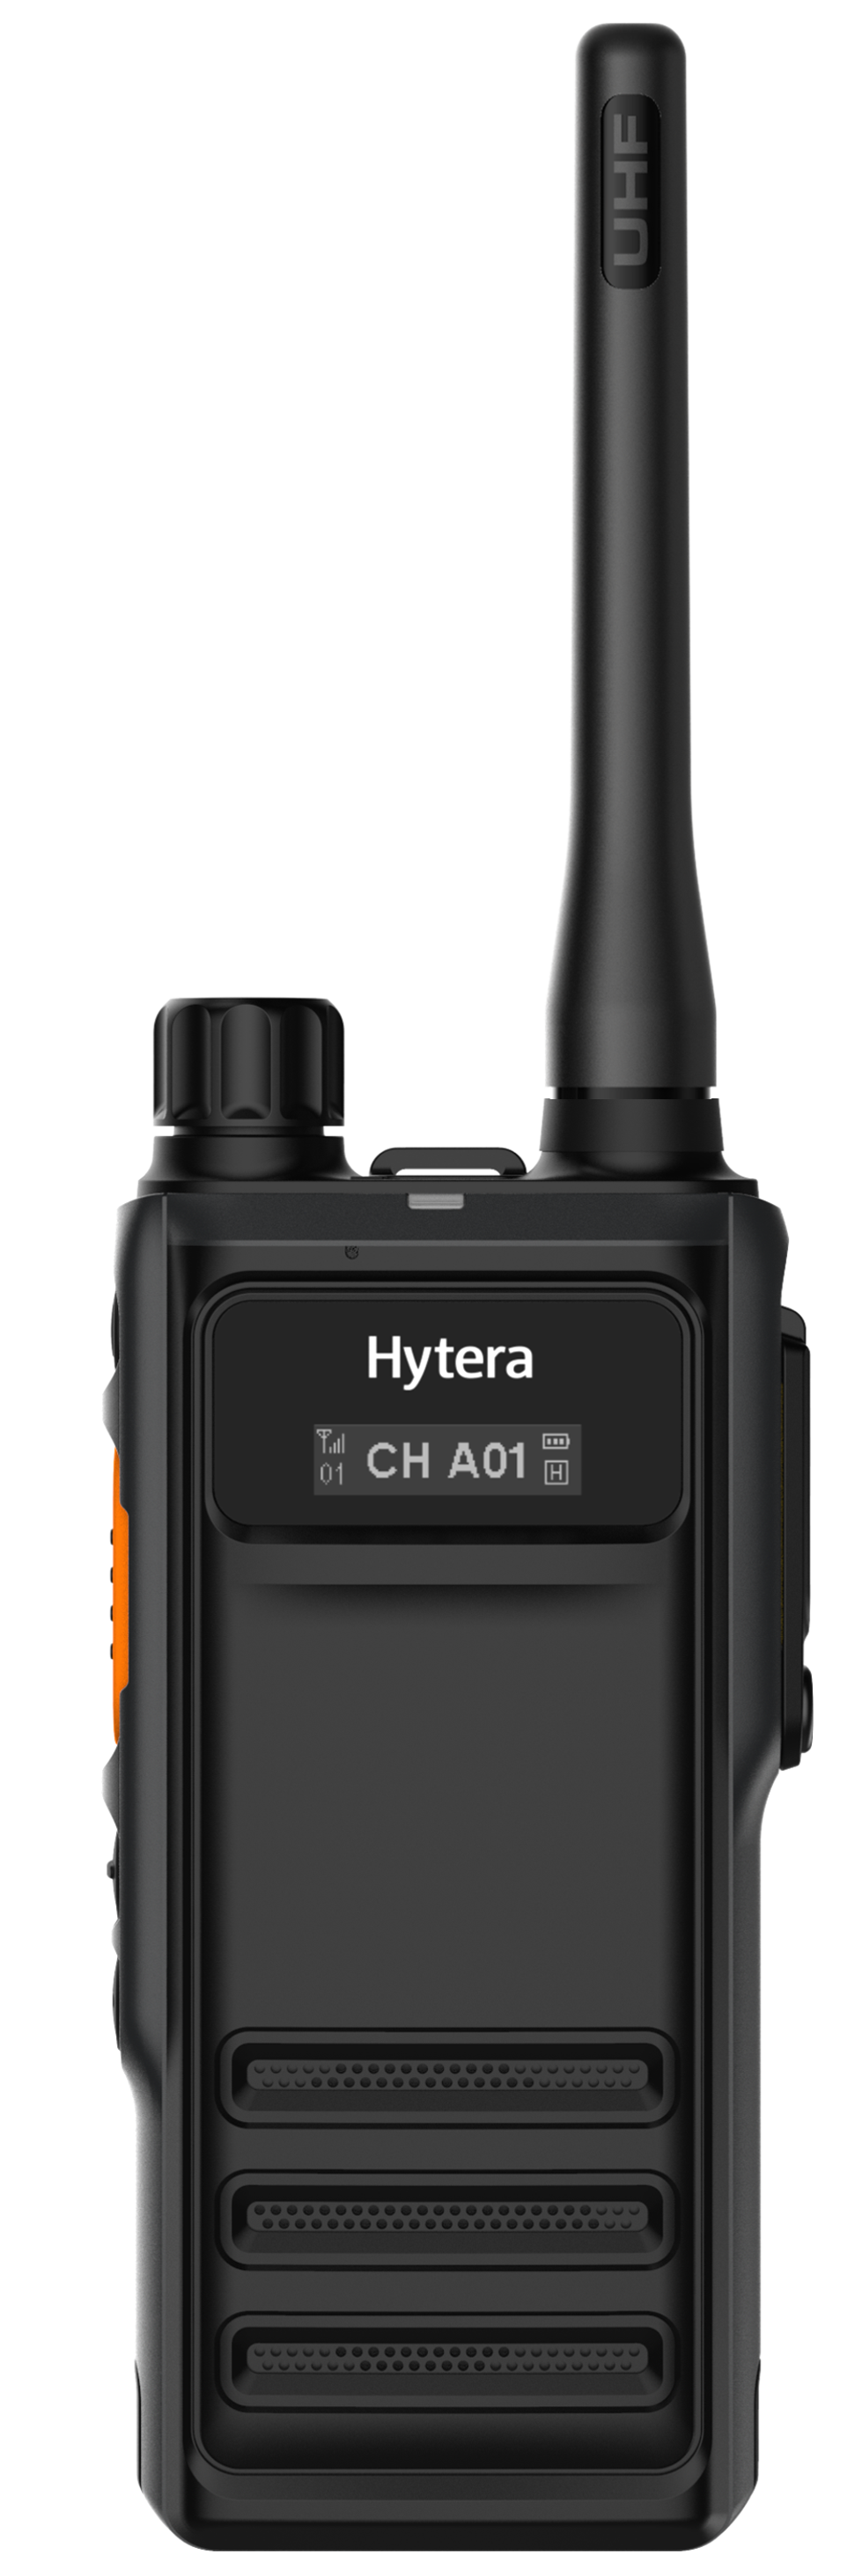 HP602 VHF/UHF Portable Walkie Talkie